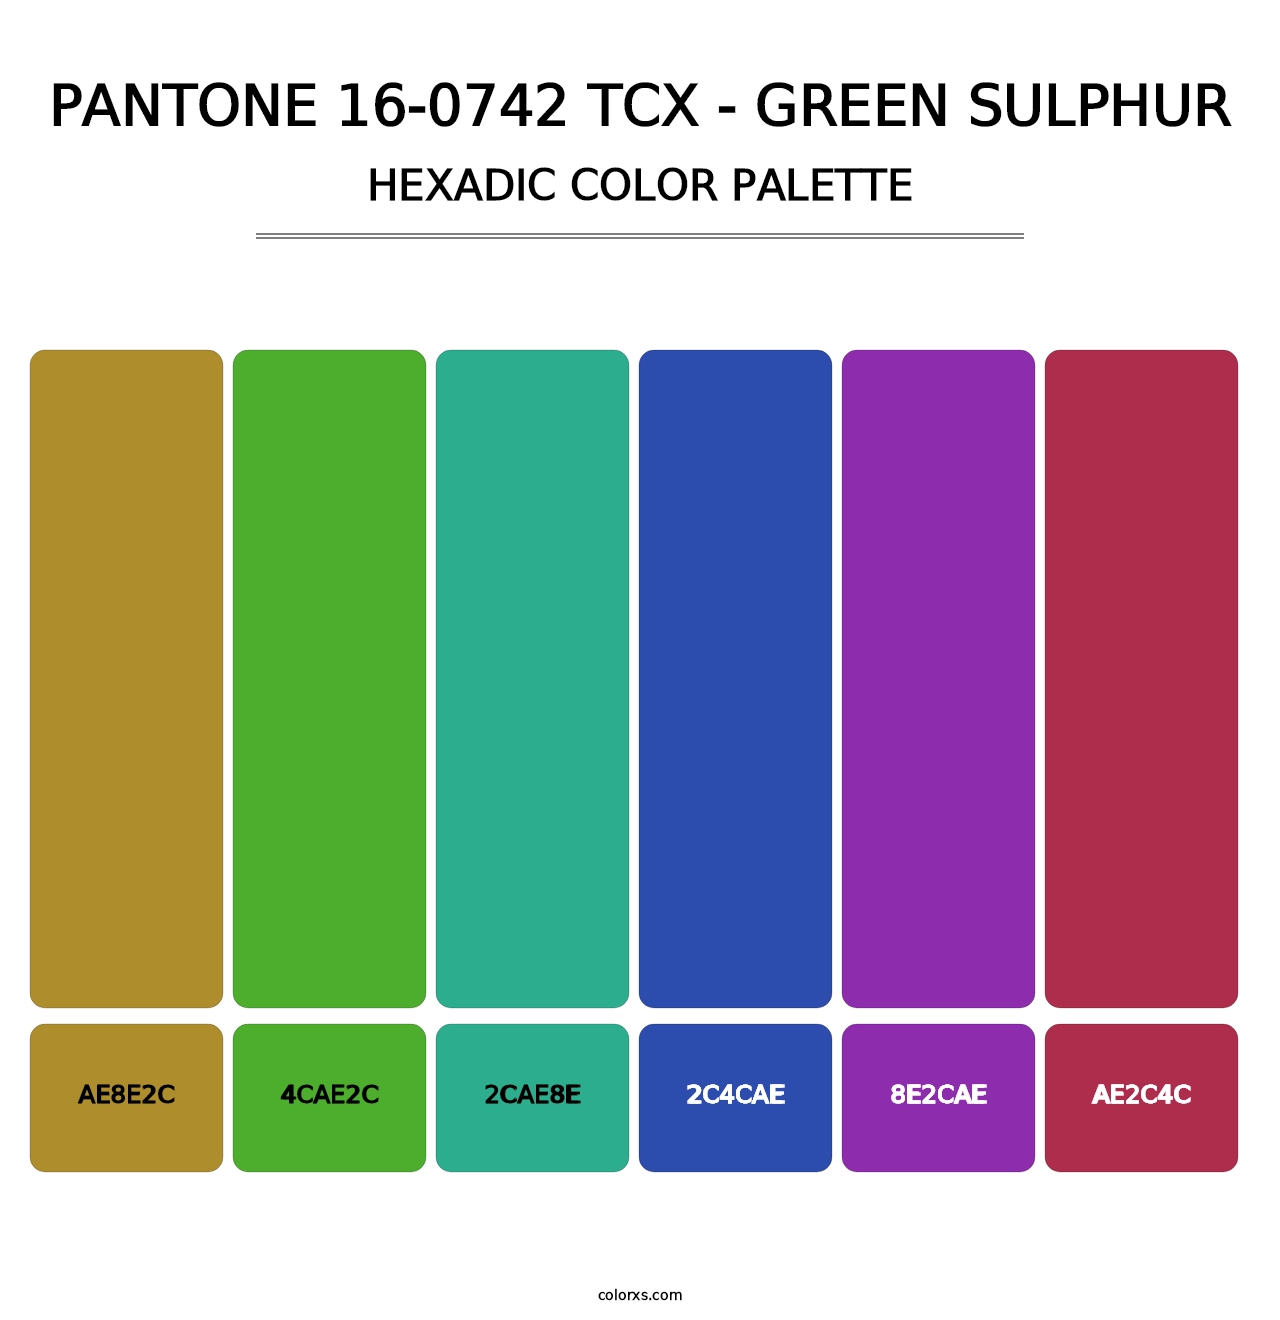 PANTONE 16-0742 TCX - Green Sulphur - Hexadic Color Palette